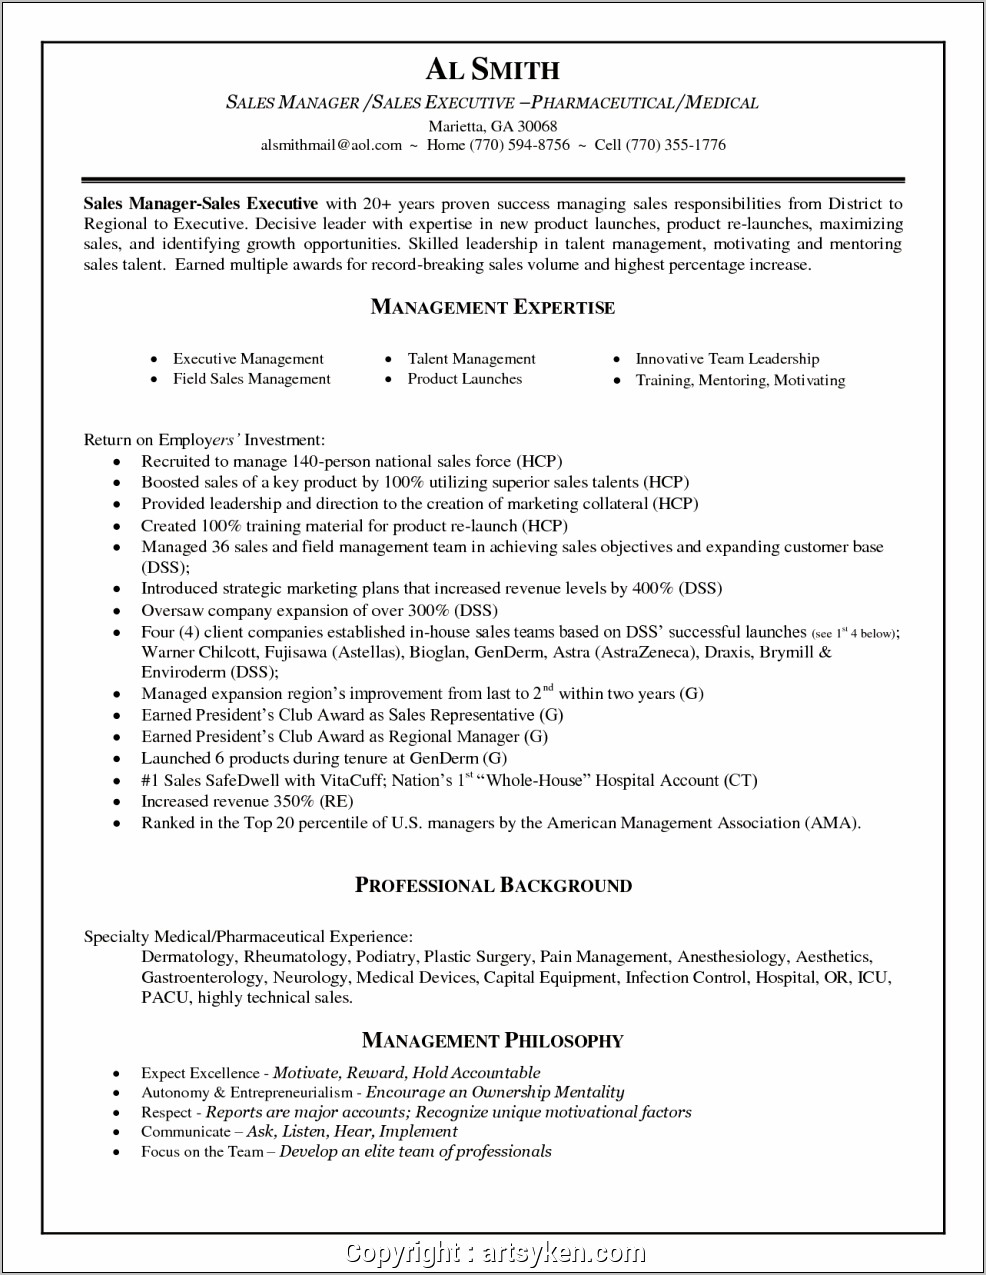 Medical Device Sales Job Description Resume